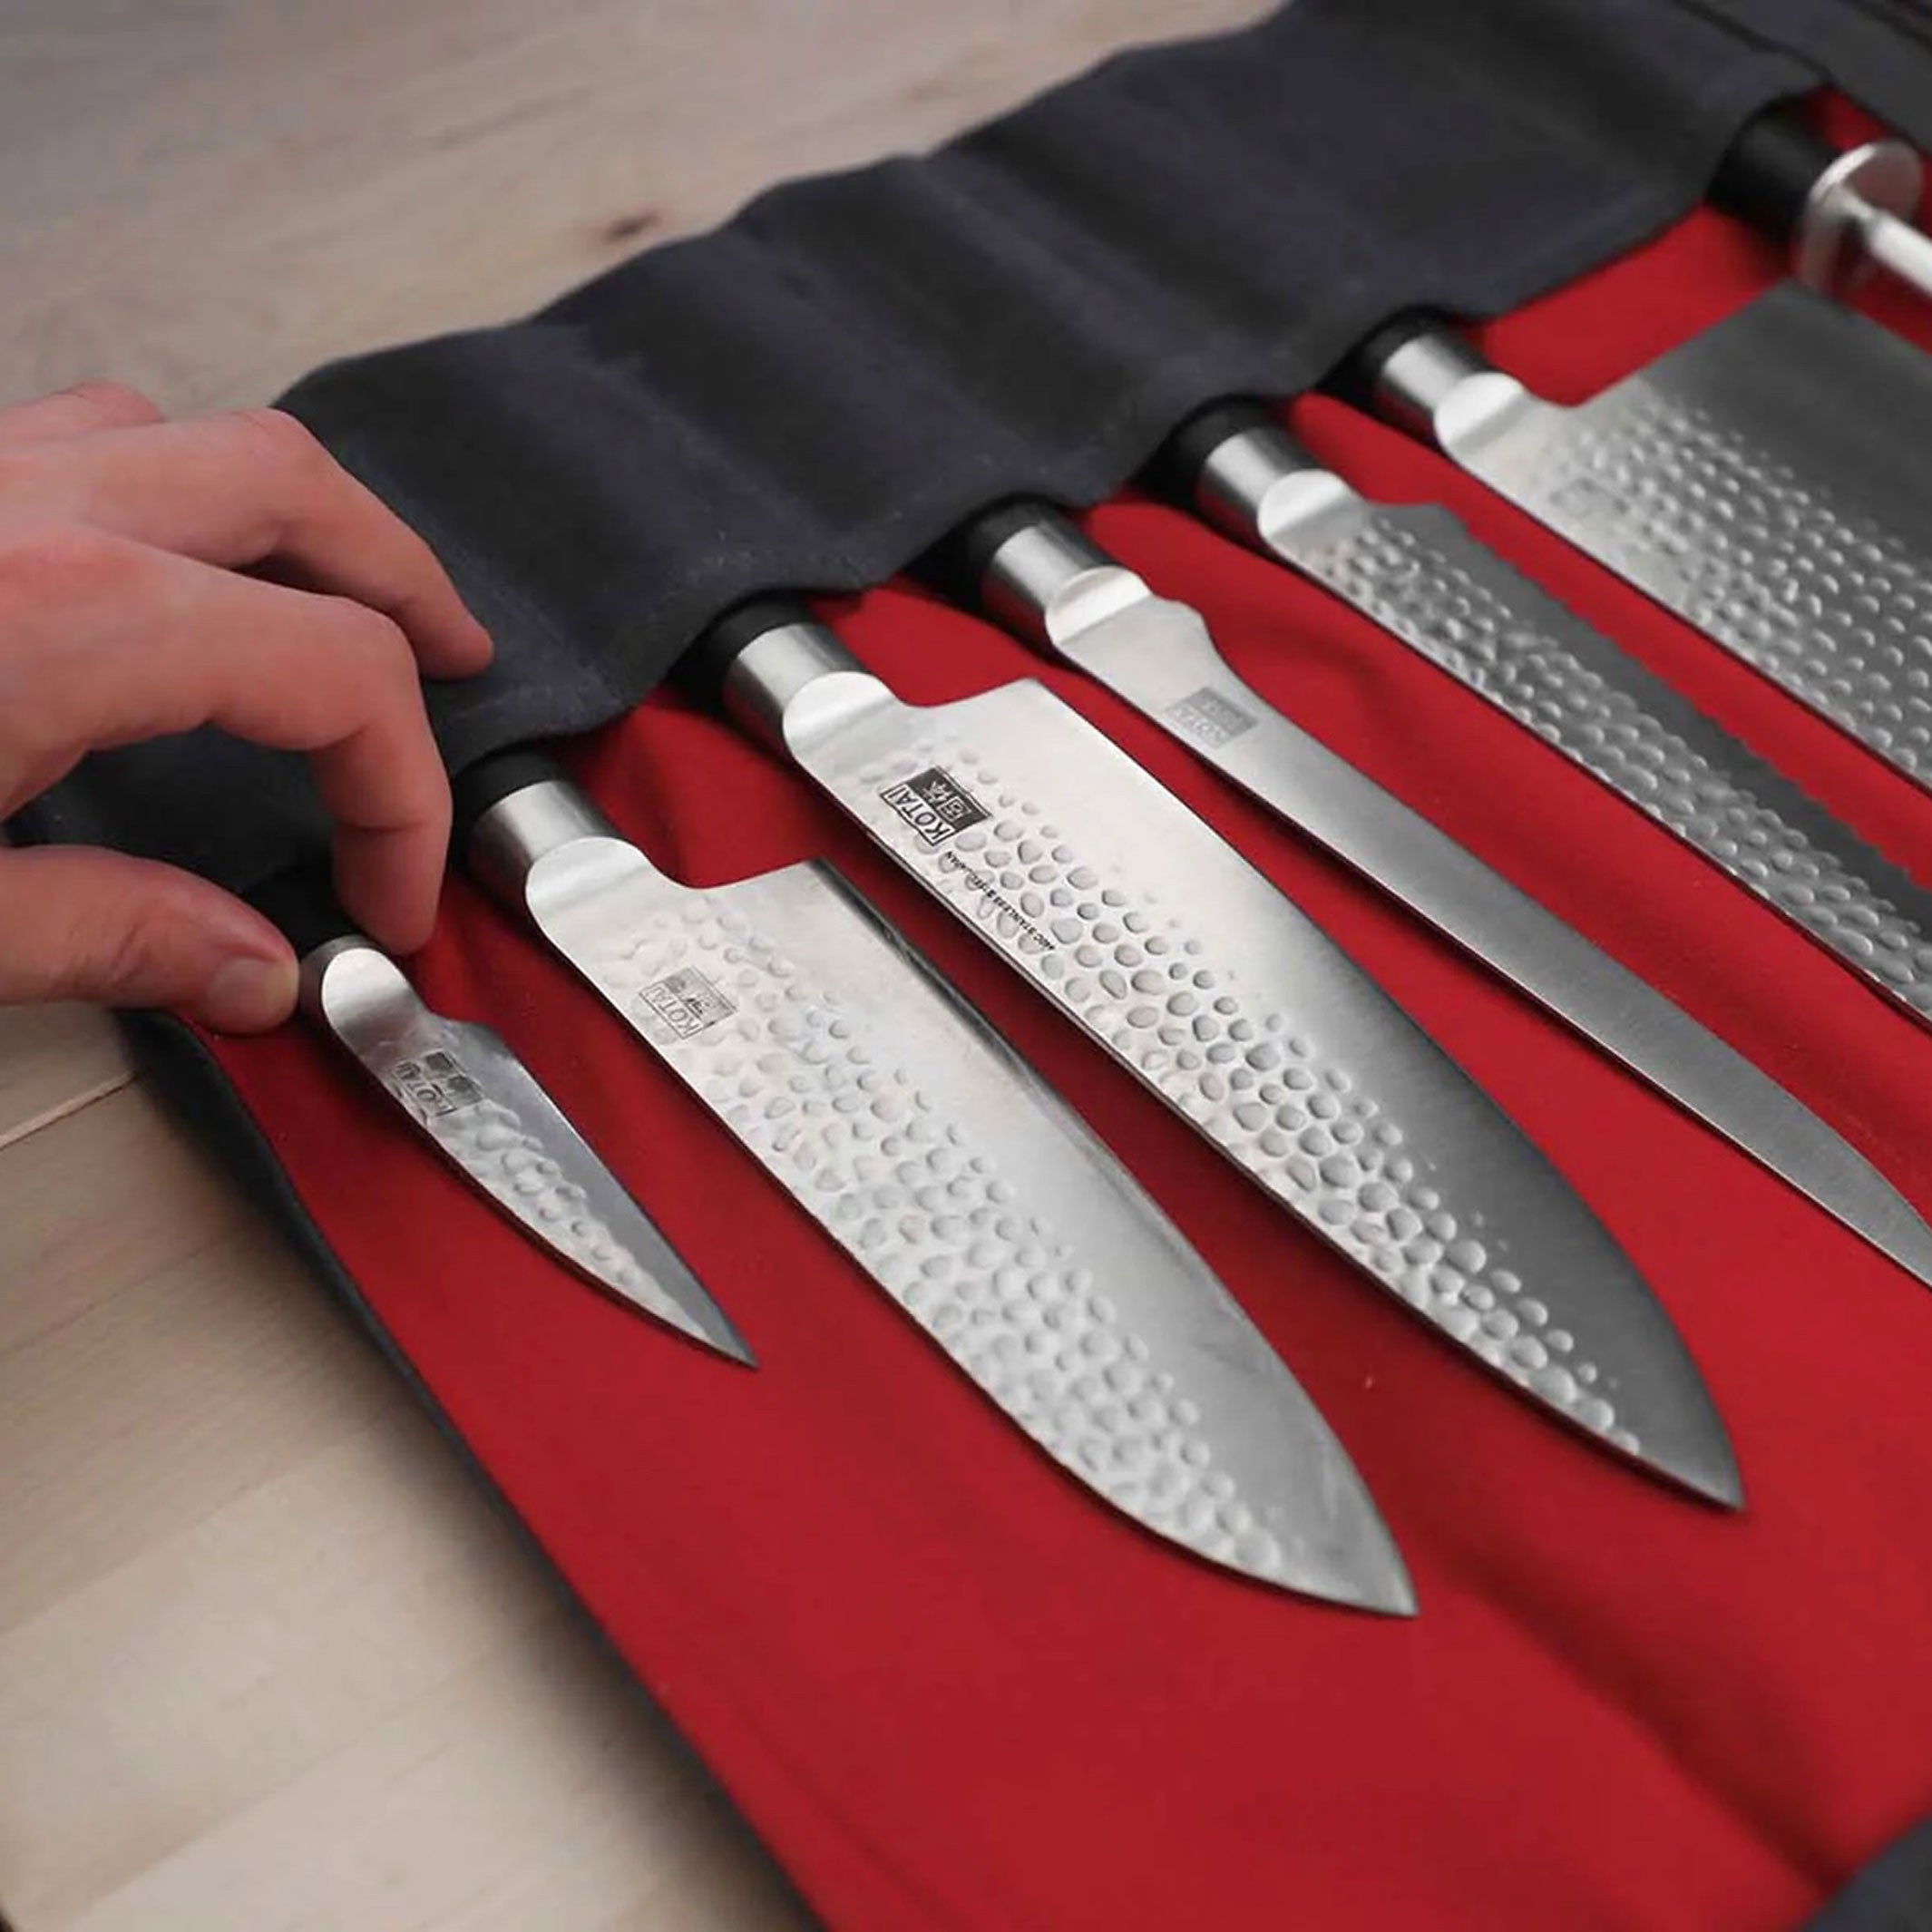 https://cdn.shopify.com/s/files/1/0065/0104/0226/products/Kotai-Knife-Set-couteaux-nomade-traveller-Messer-Set-knives-chef-knife-rollup-bag-Messertasche-mood-2130.jpg?v=1665240941&width=2130